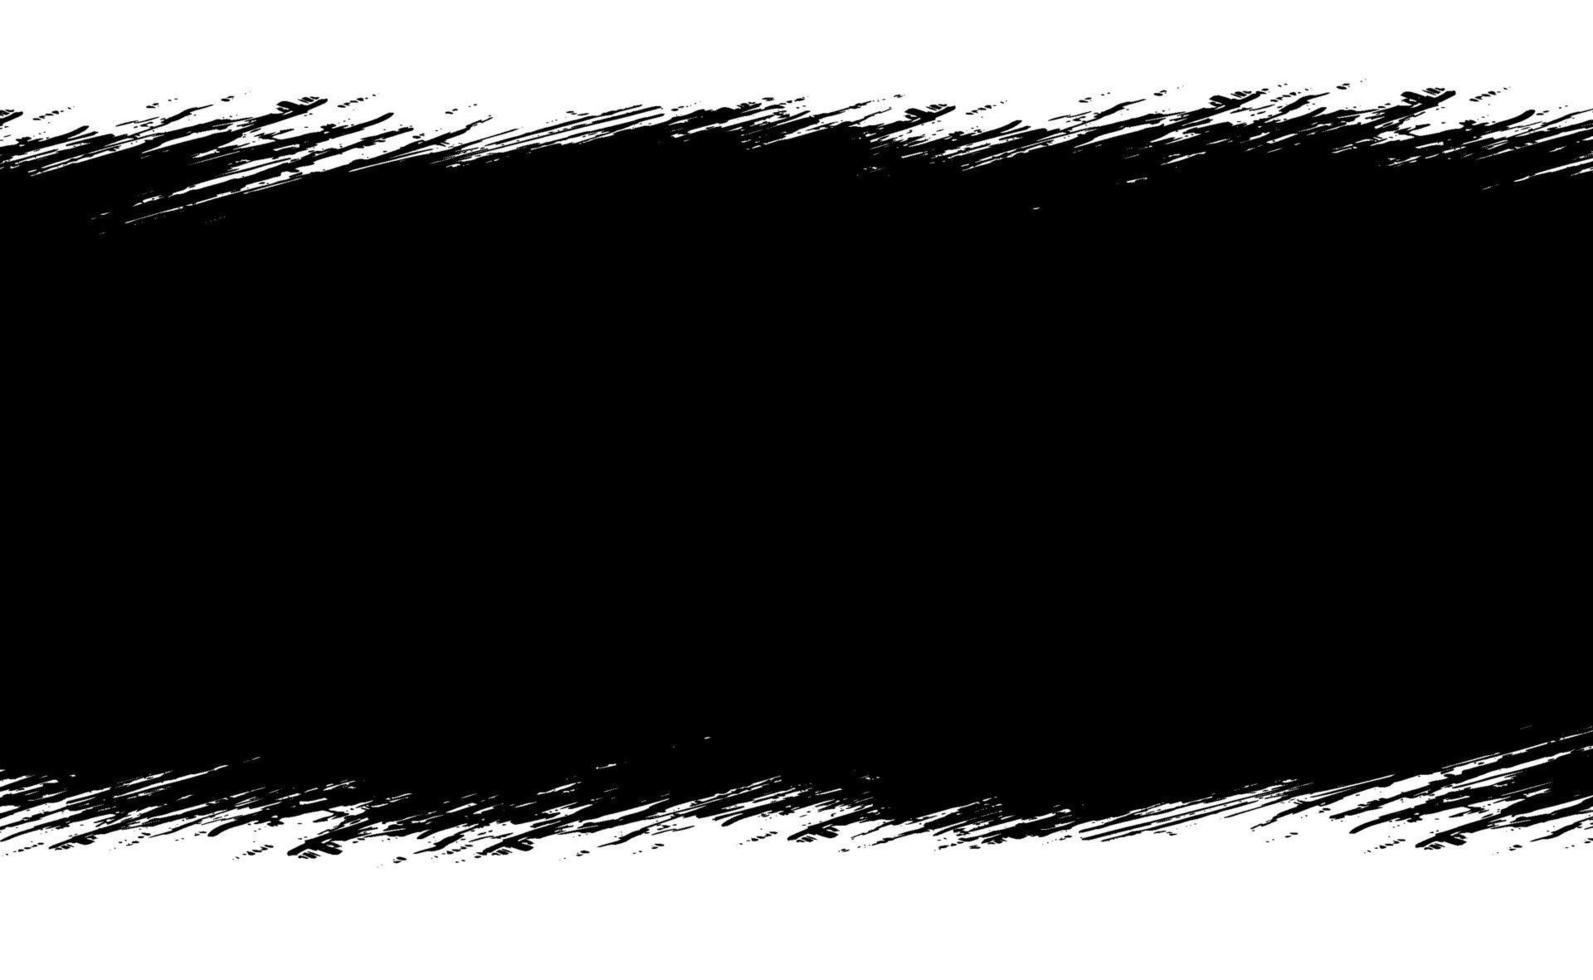 utstryk av svart färg på en vit panoramabakgrund - vektor